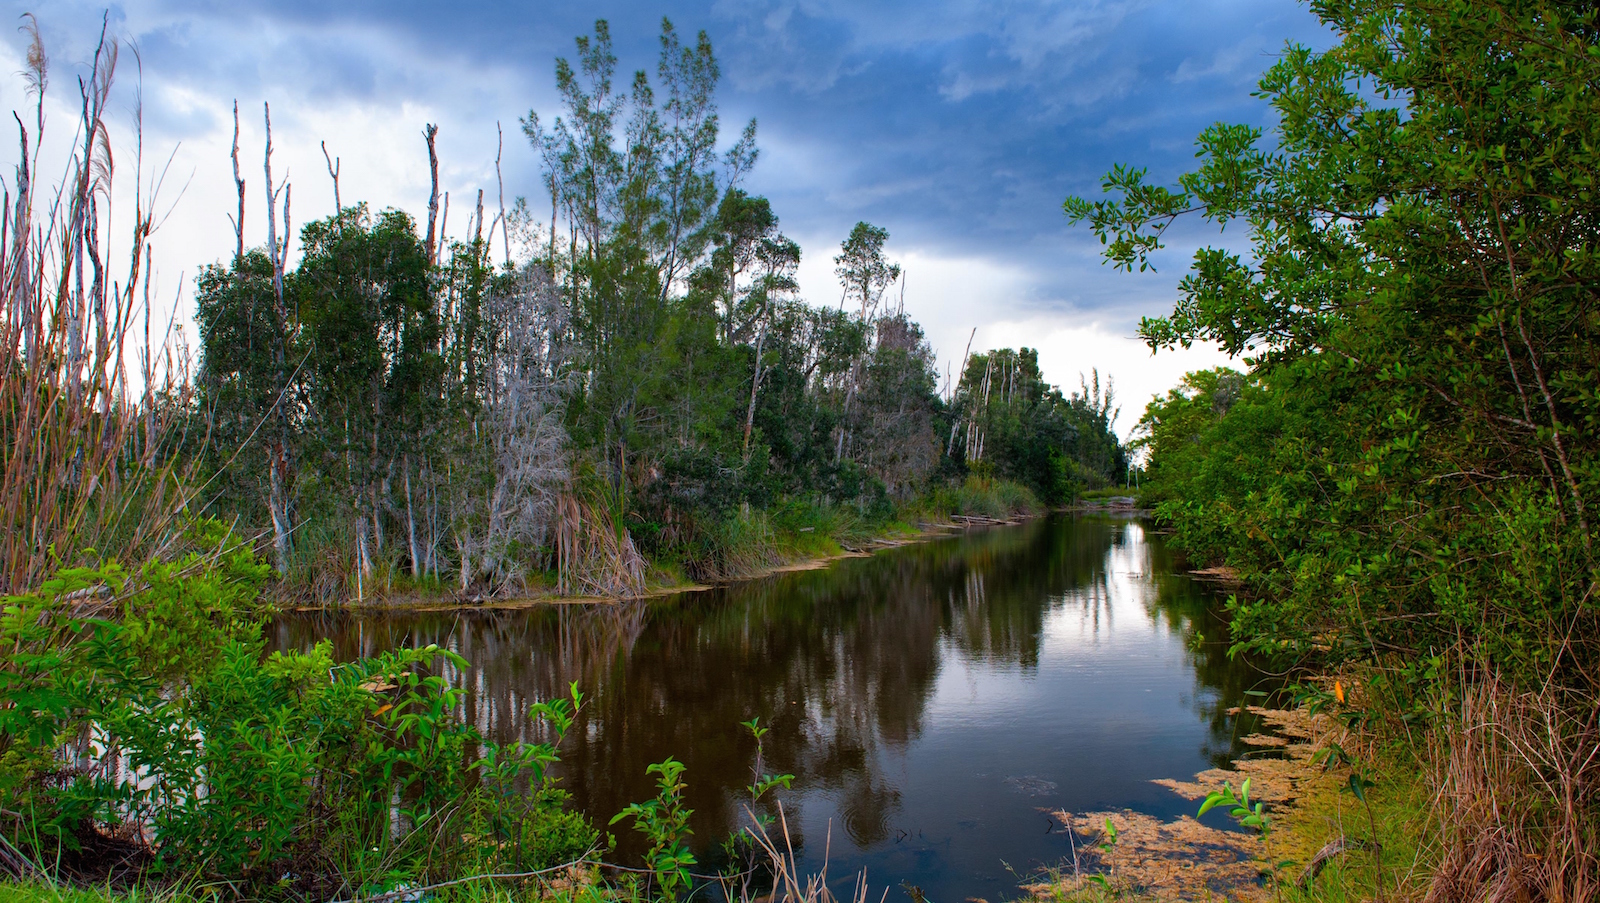 Waterway part of the Everglades.